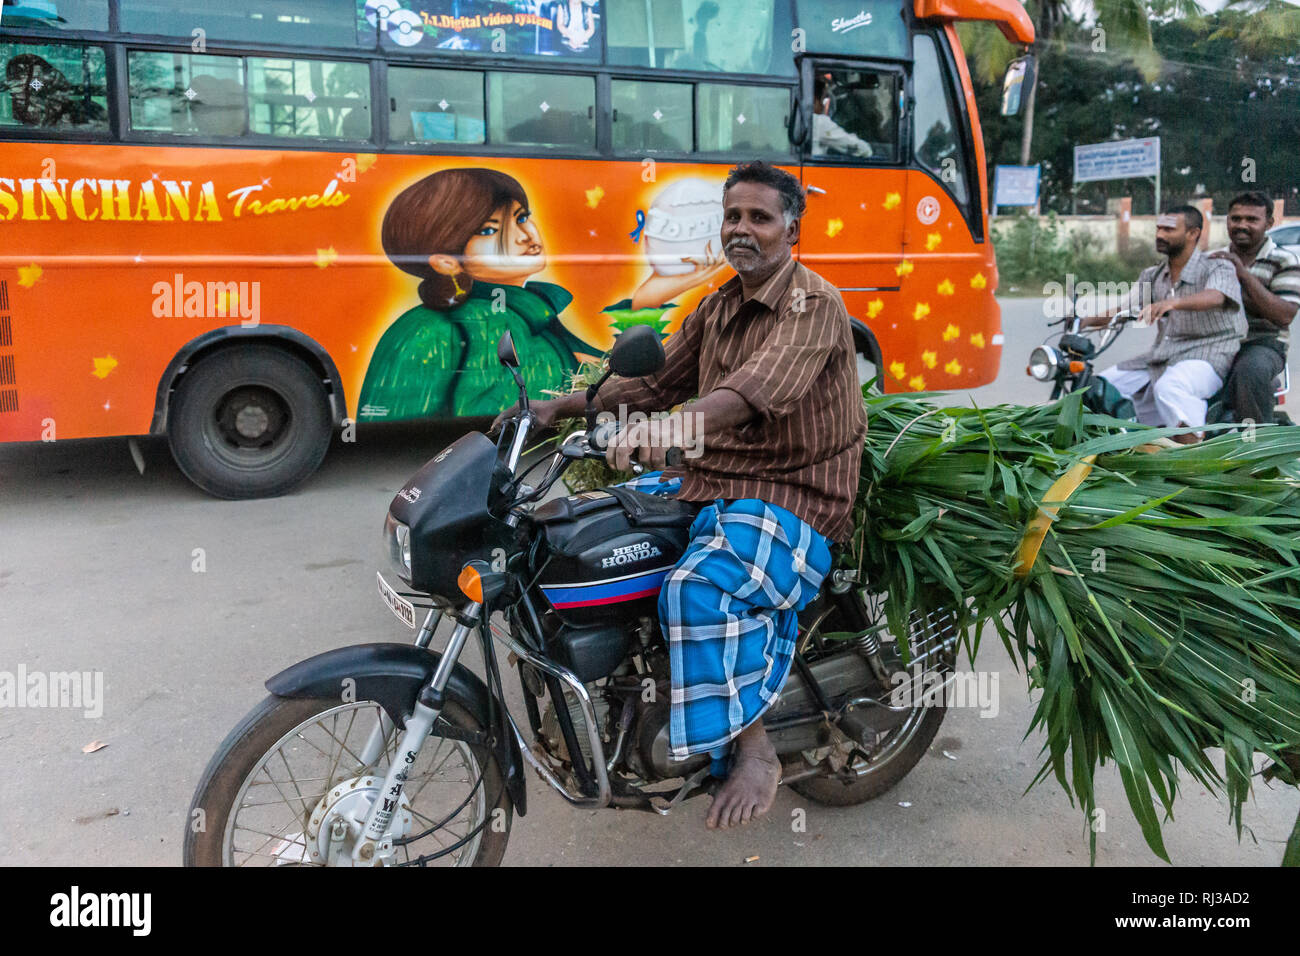 Halebidu, Karnataka, India - November 2, 2013: Street scene in town with orange public bus and motorcycles, one overloaded with green sugar cane stalk Stock Photo